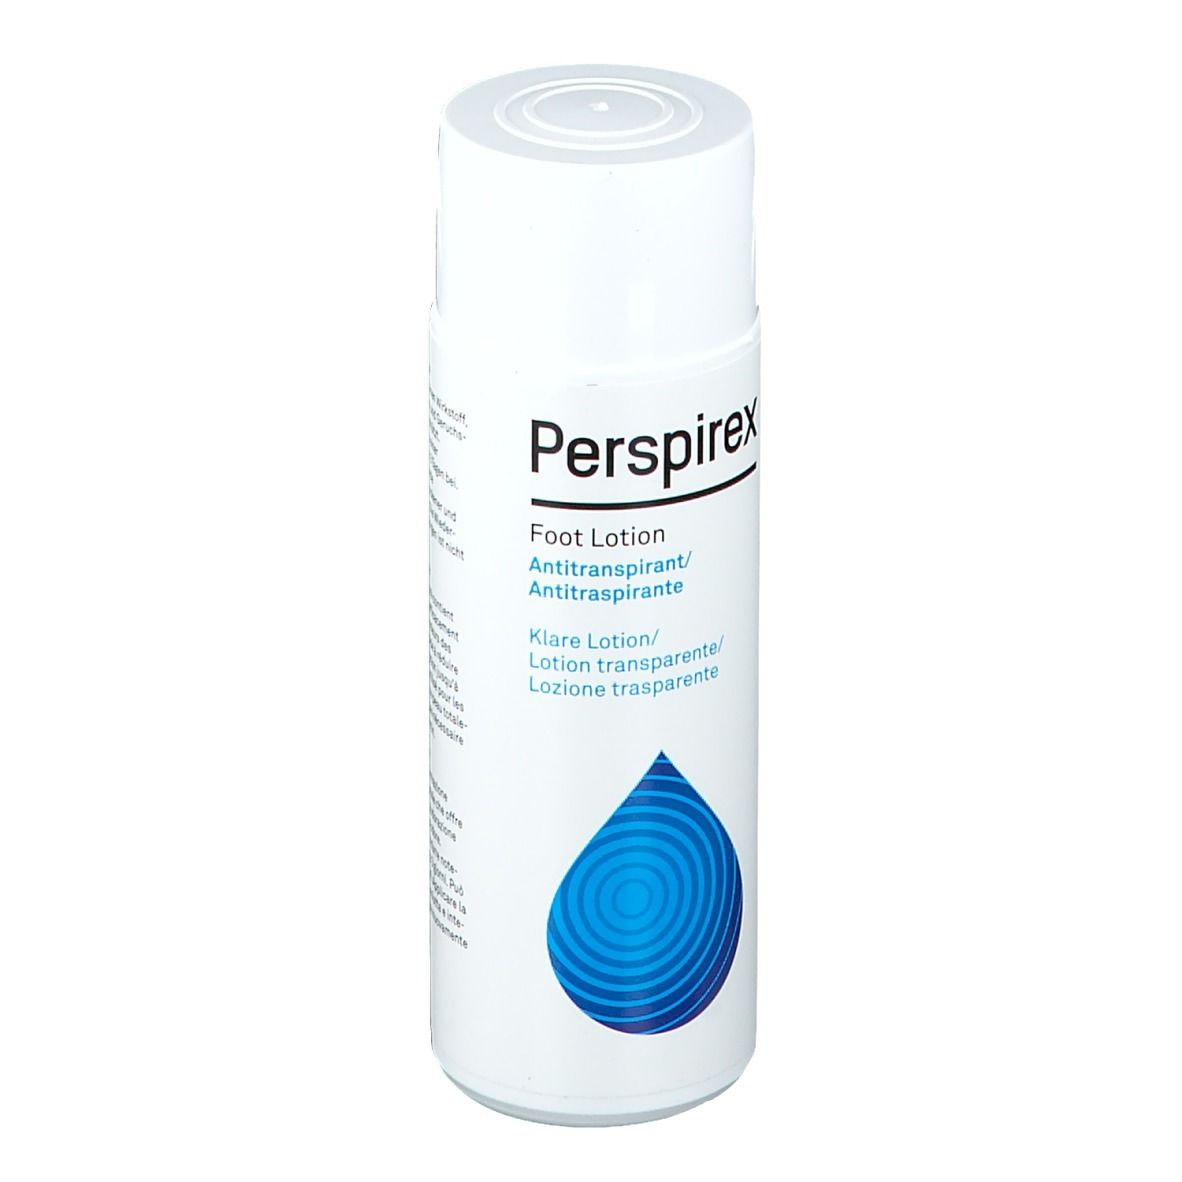 Perspirex Foot Lotion Antitranspirant